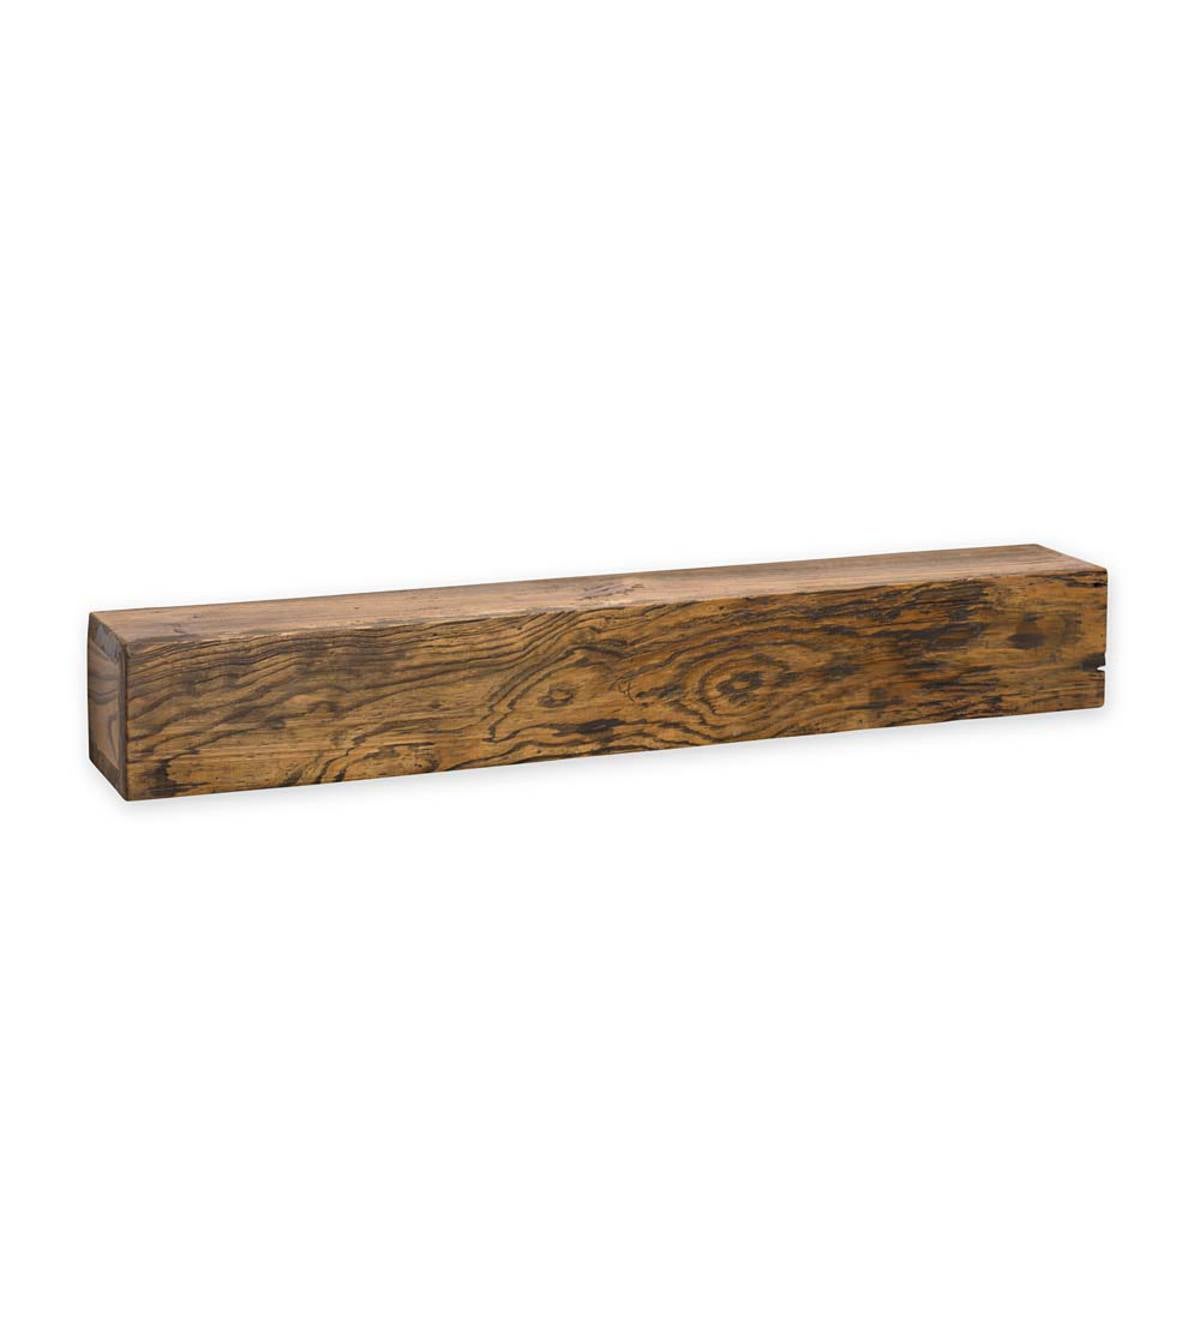 Rustic Wooden Shelf, 30"L